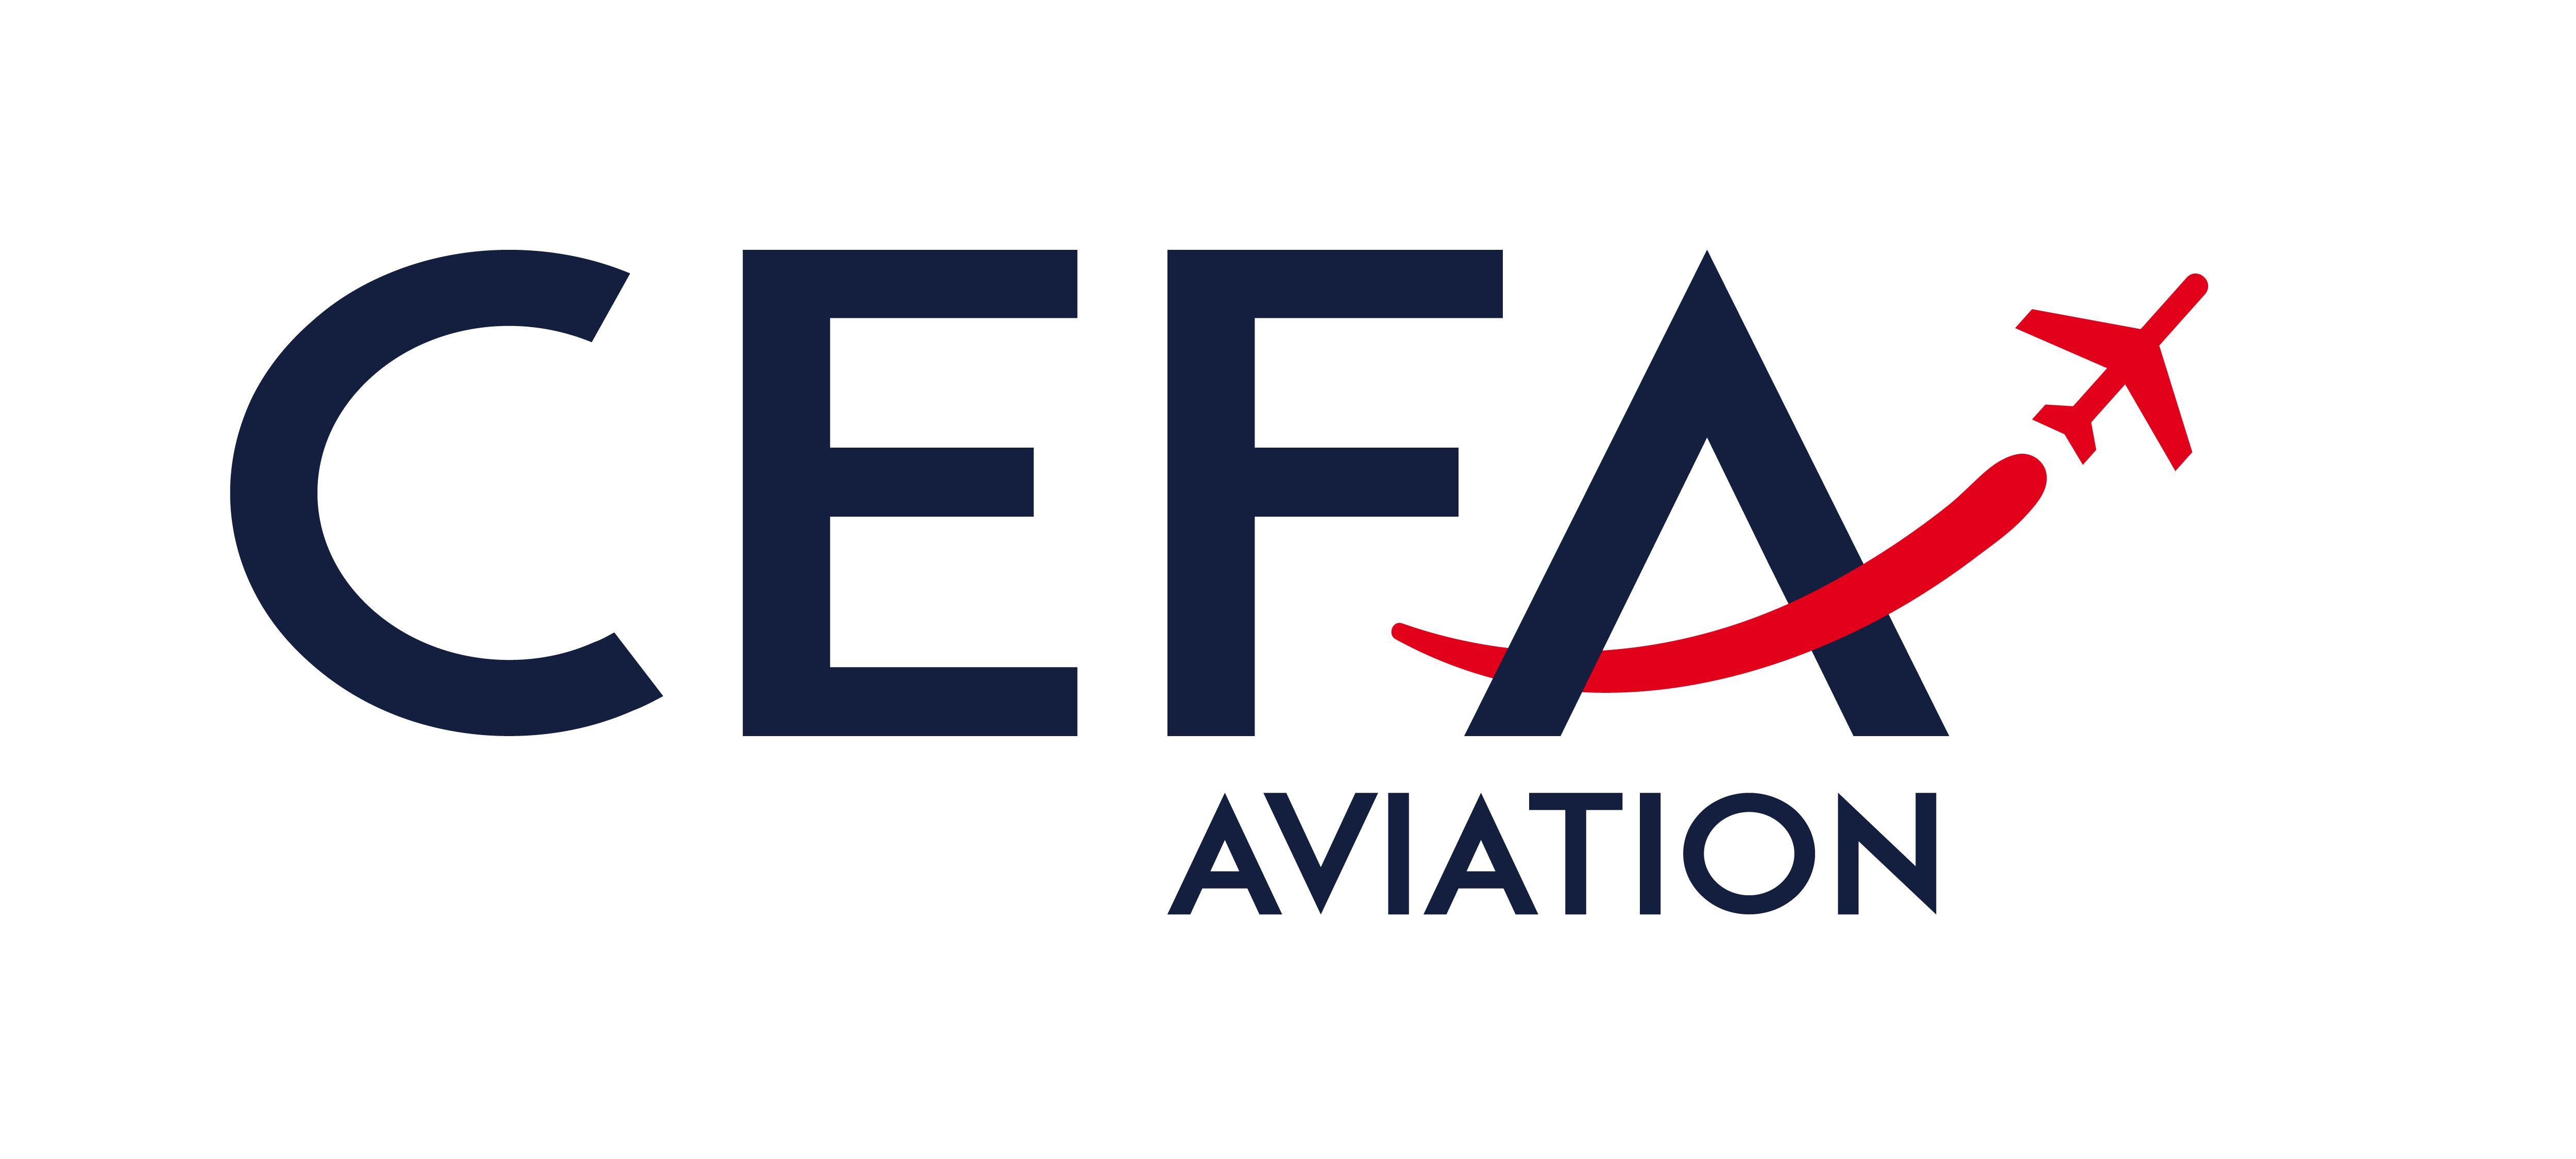 GE Aviation Logo - CEFA Aviation&GE partner in Flight Analysis & Animation | CEFA AVIATION